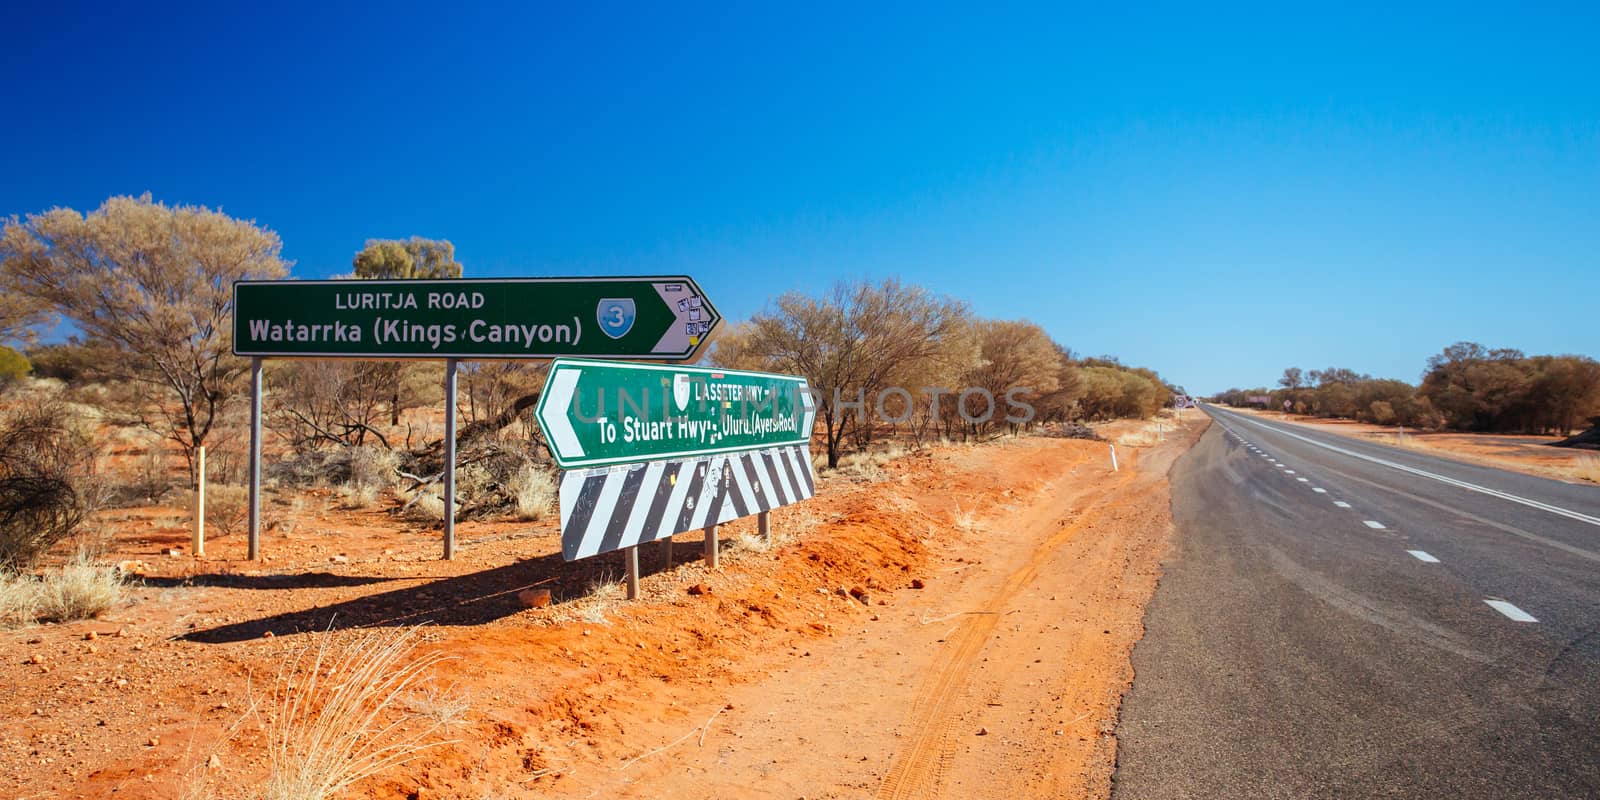 Uluru Road Sign in Outback Australia by FiledIMAGE